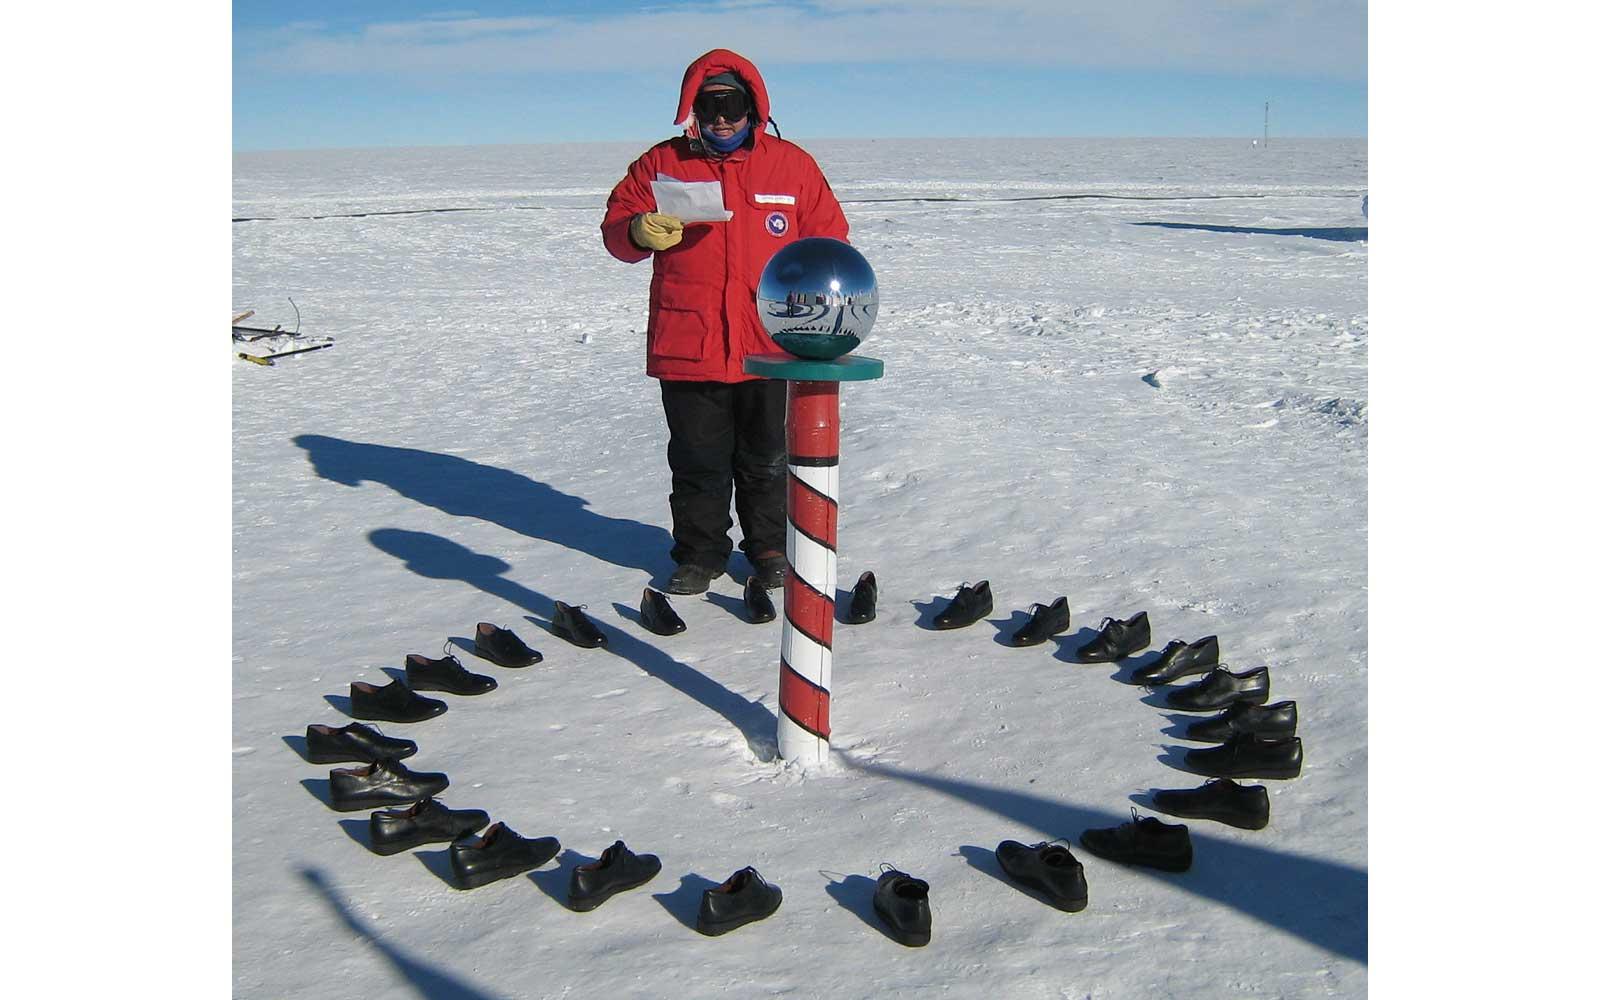 Xavier Cortada, Longitudinal Installation, Ritualistic Performance at South Pole, 2007.